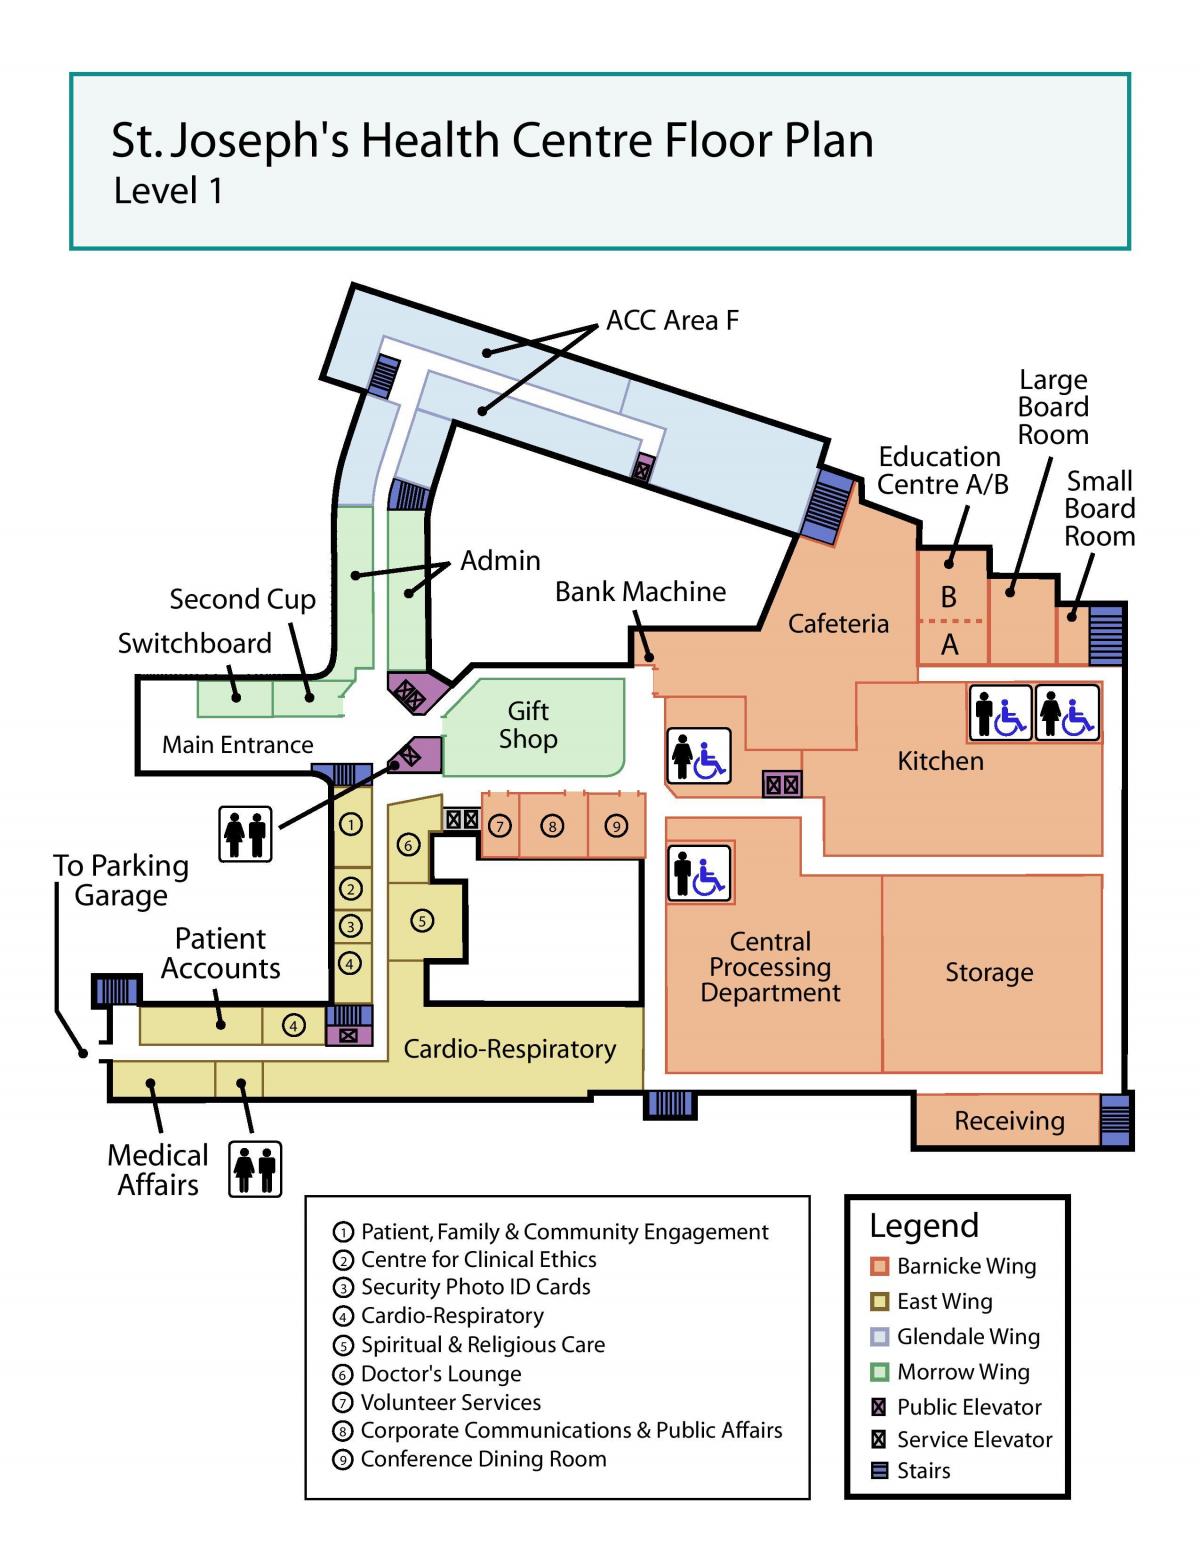 نقشه از سنت جوزف سلامت مرکز تورنتو سطح 1